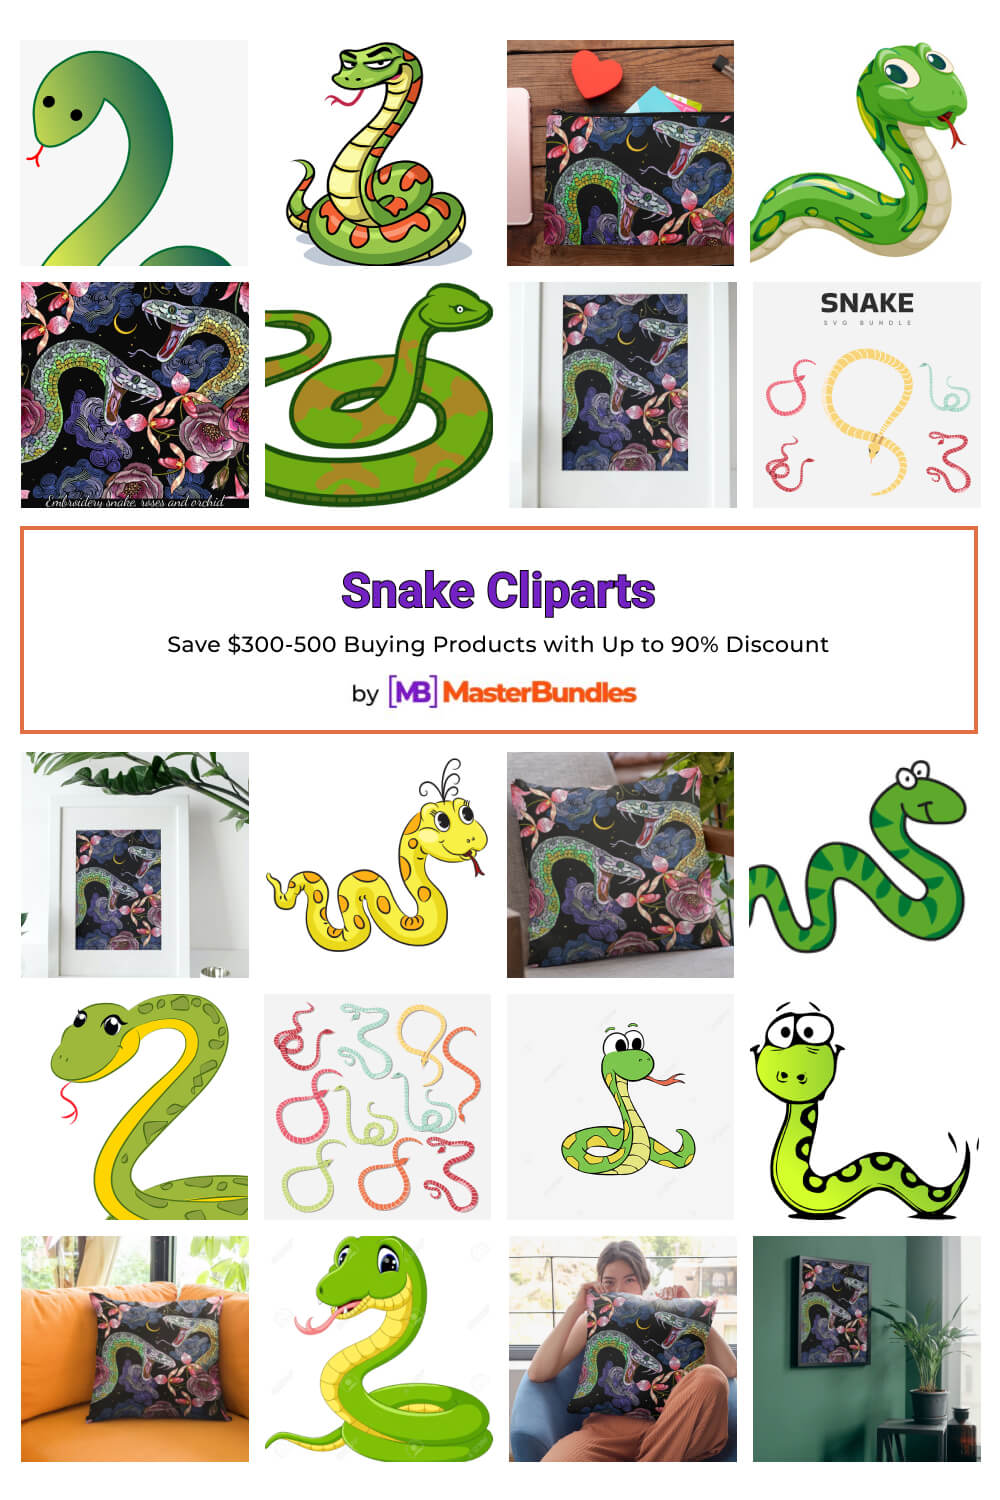 snake cliparts pinterest image.